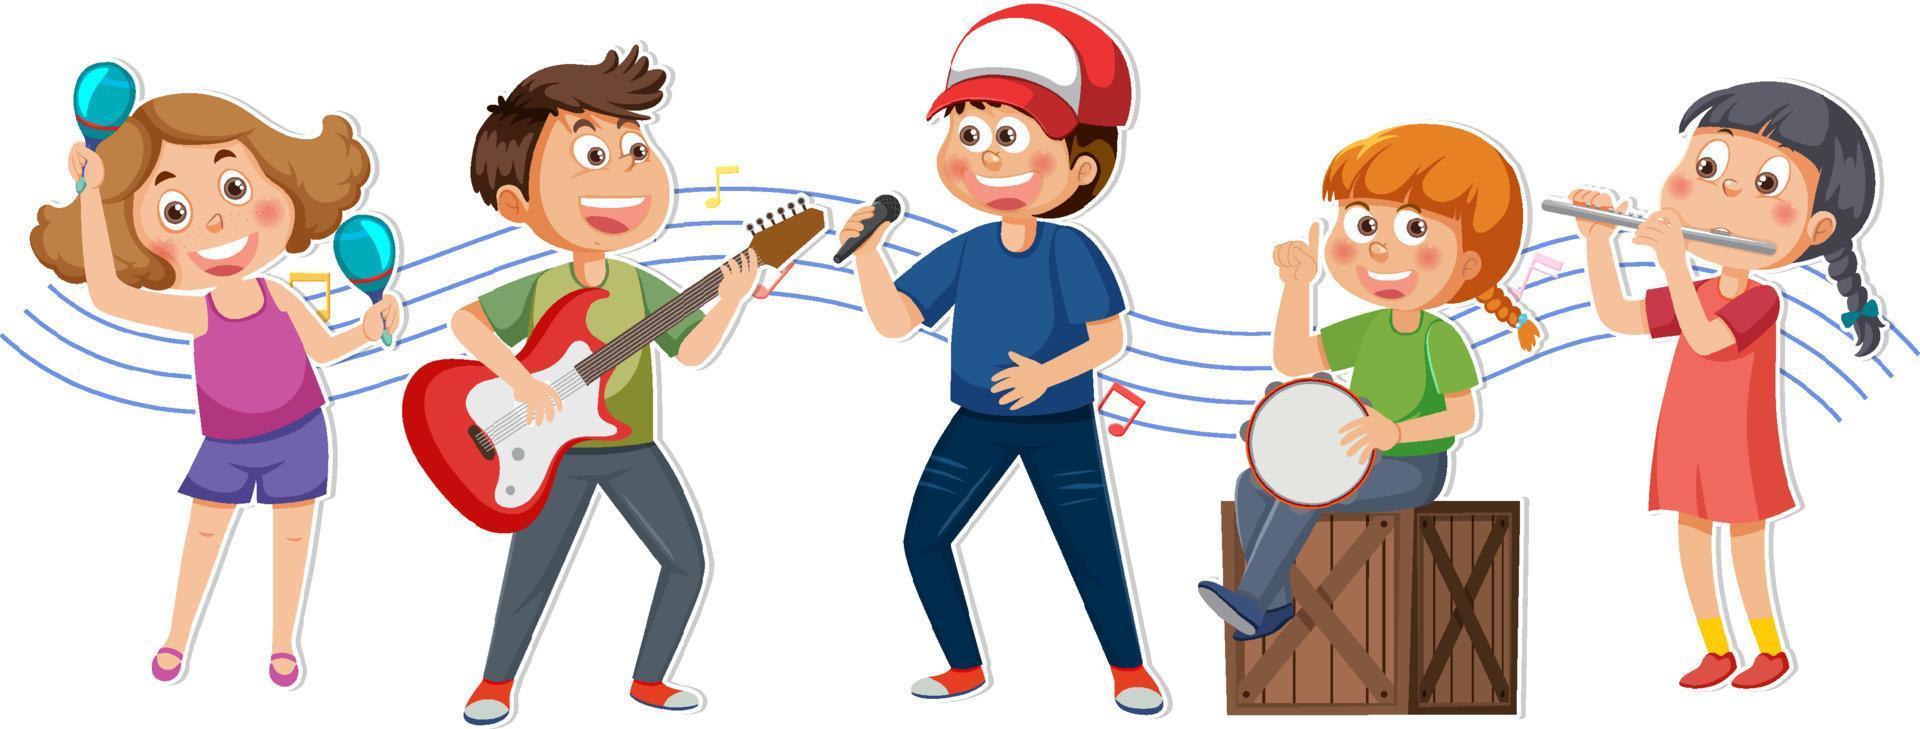 Children playing musical instrument vector